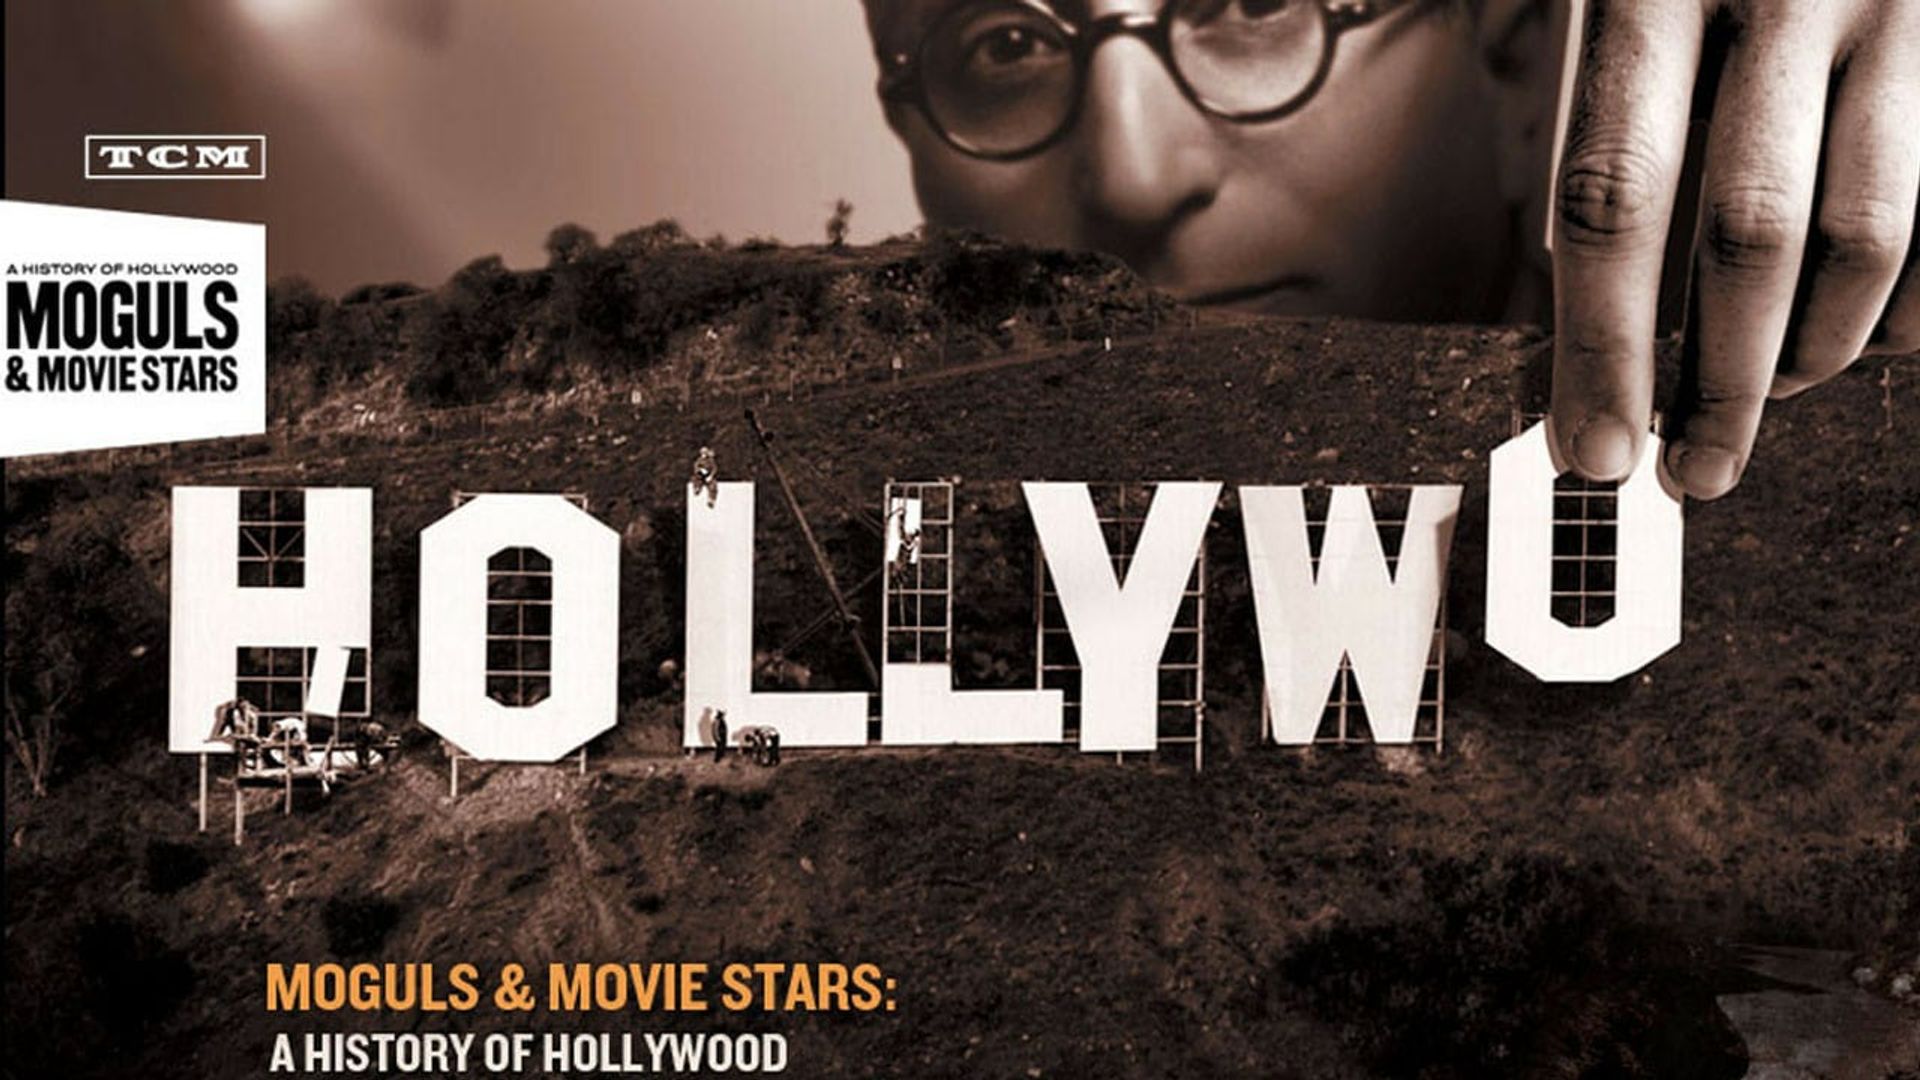 Moguls & Movie Stars: A History of Hollywood background